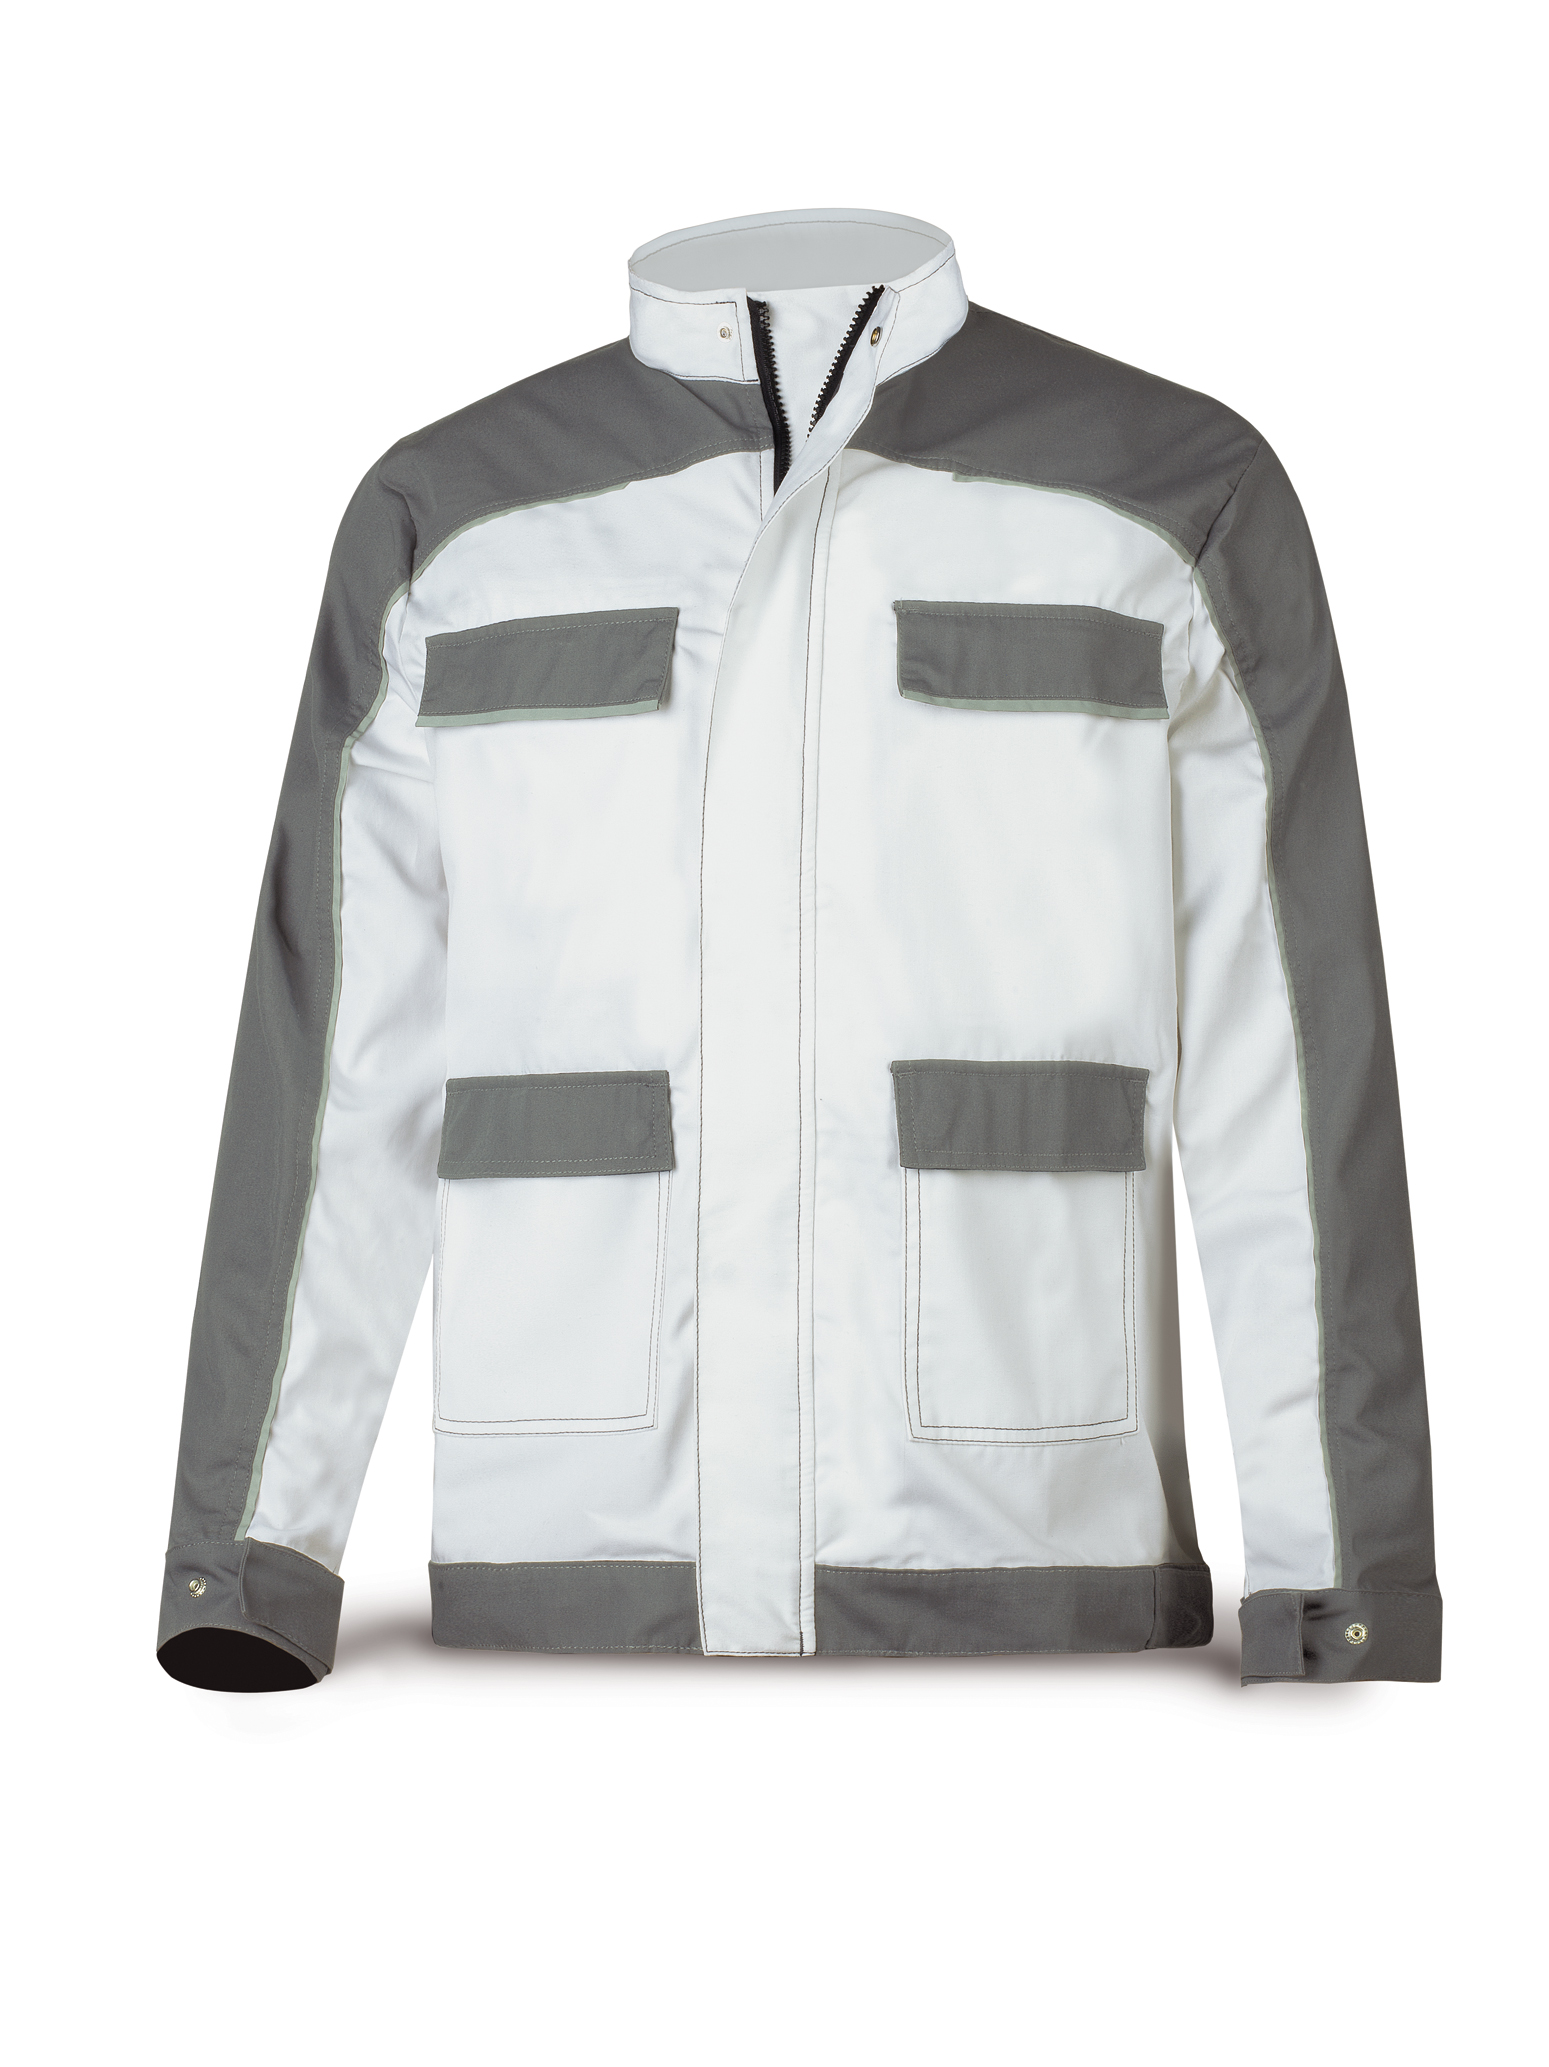 588-CBG Workwear Pro Series Tergal 245 gr. Canvas jacket. White/Grey.